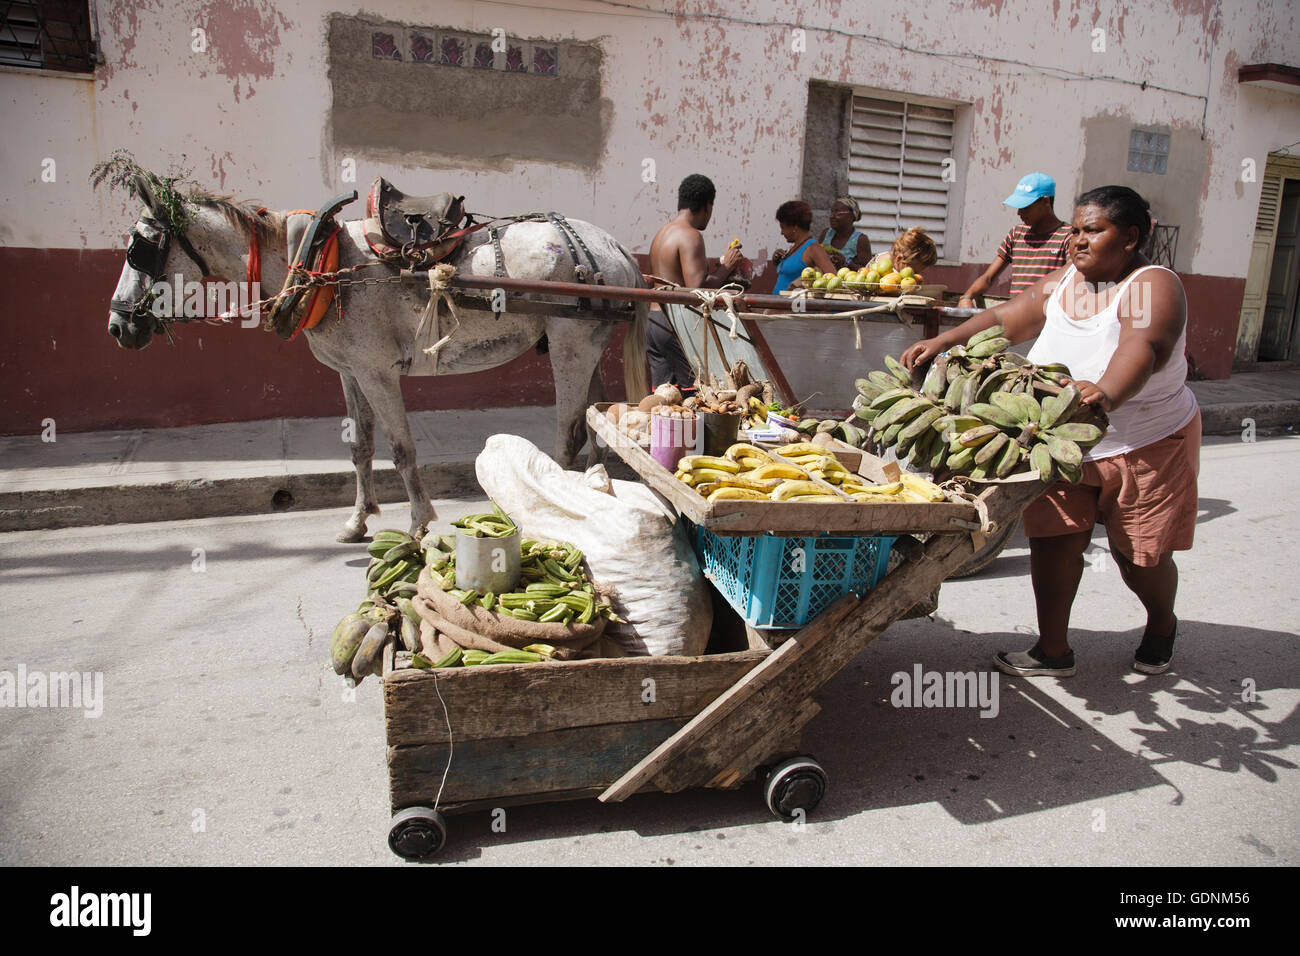 Street vendors selling fruit from carts in Santiago de Cuba, Cuba Stock Photo